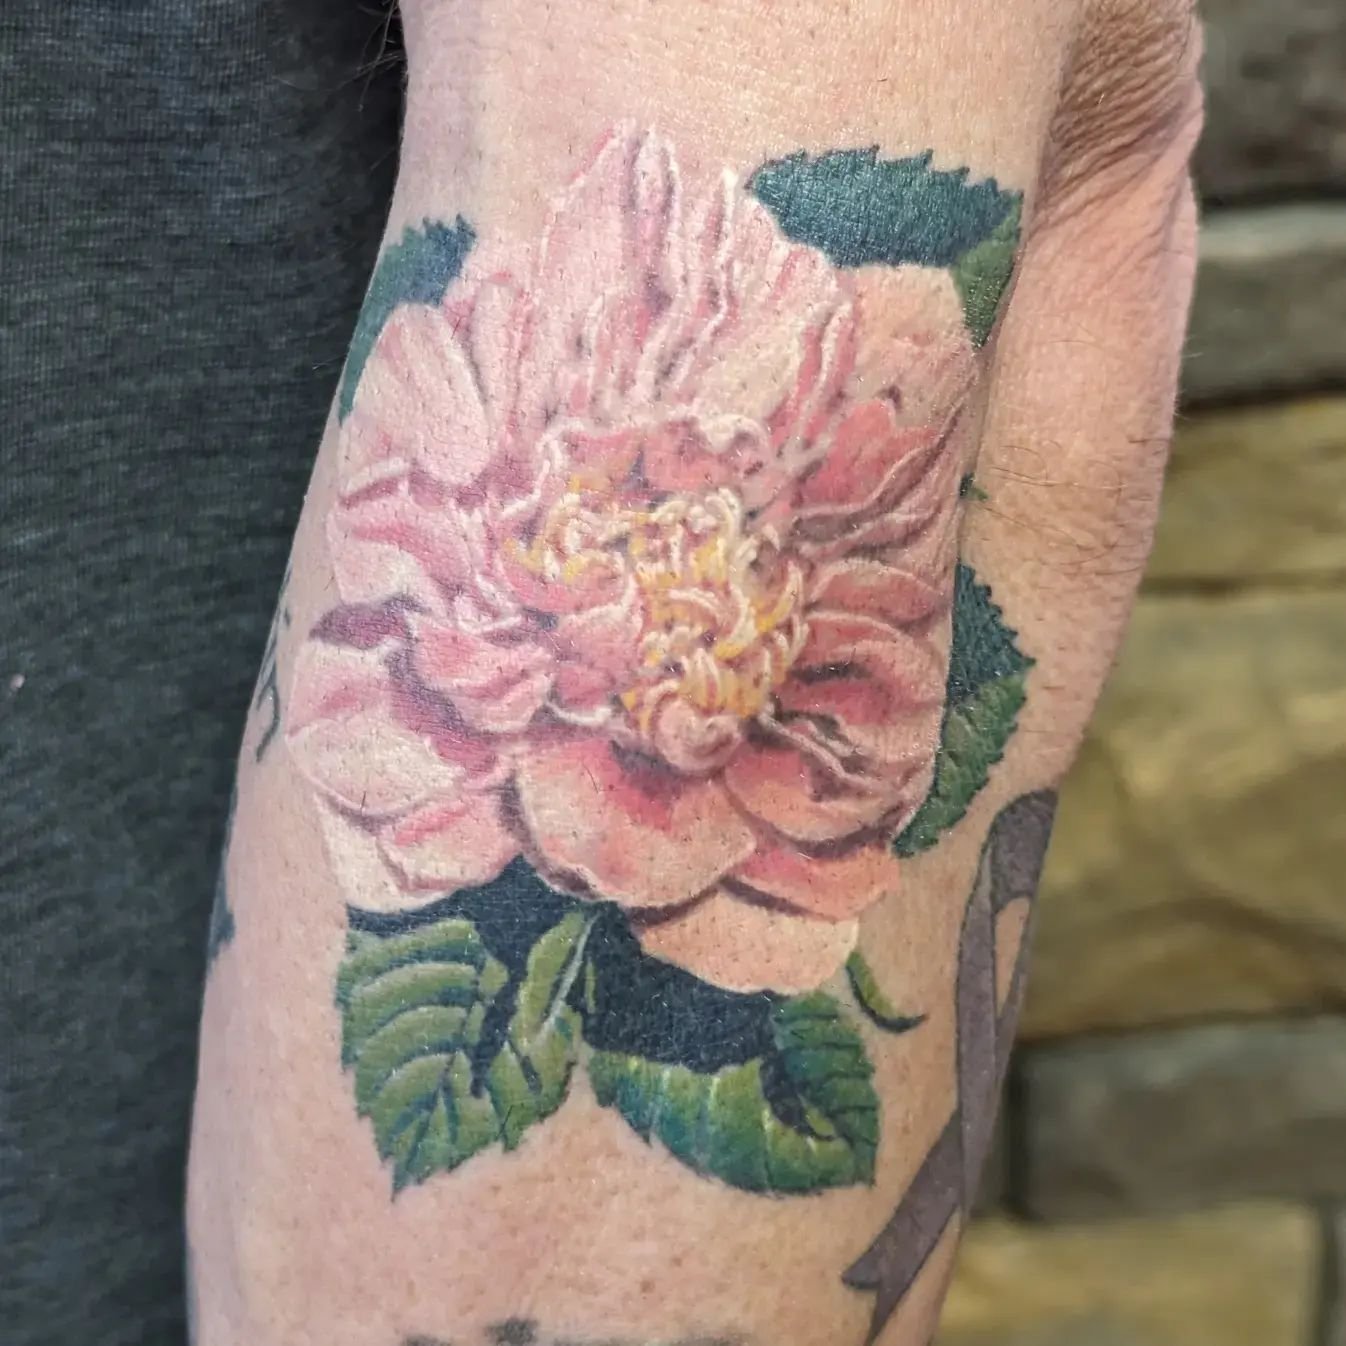 Healed pink wild rose 
By: Nelson
-
-
-
-
#tattoo #customtattoo #colourtattoo #realistictattoo #besttattoo #qualitytattoo #flower #rose #art #ottawatattoo #ottawaontario #orleansontario #rocklandontario #613tattoo #design #flowertattoo